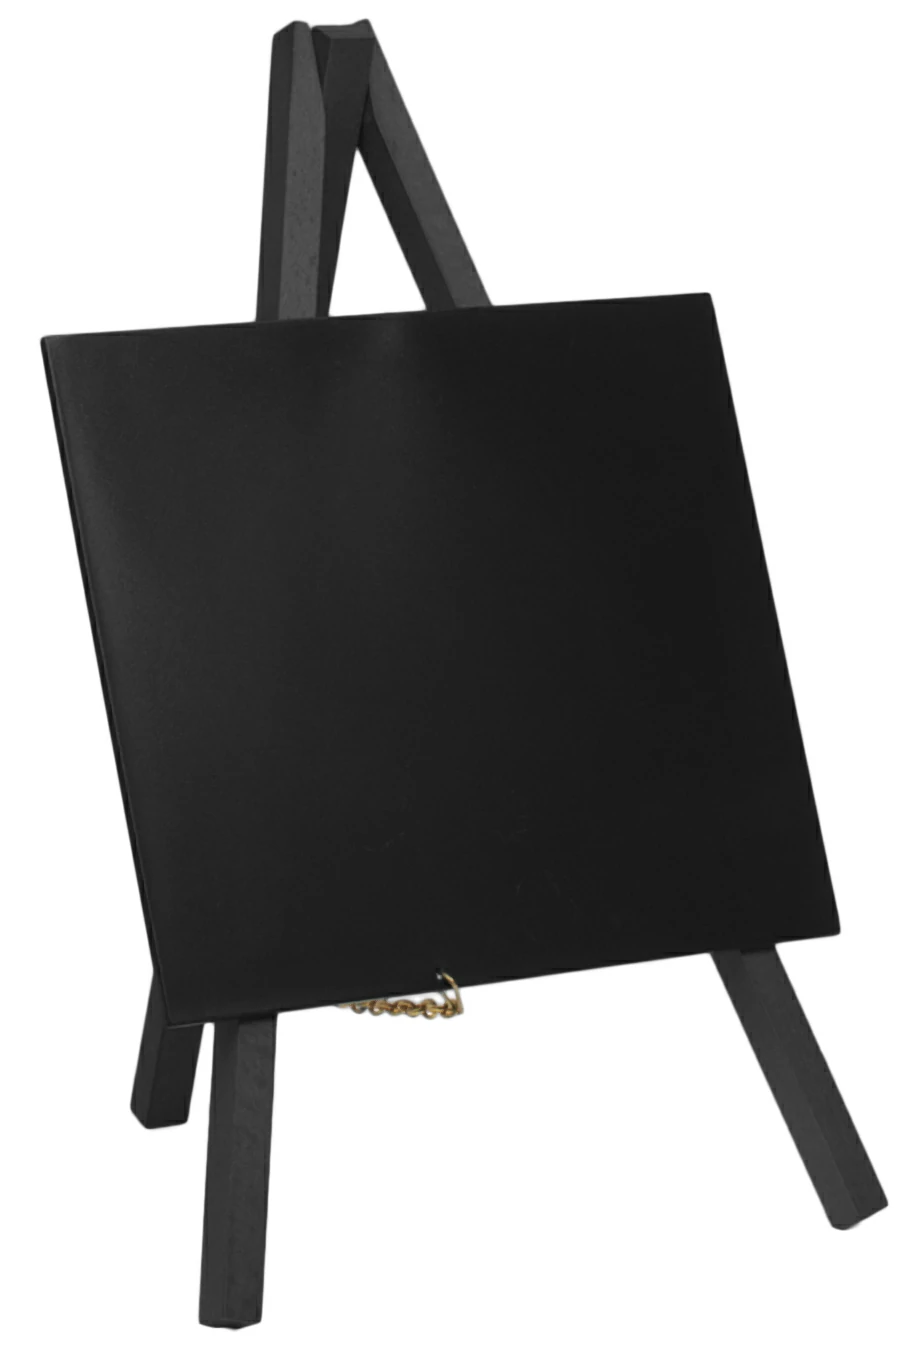 Mini Chalkboard Easel 24 X 11.5cm Black Pk 3